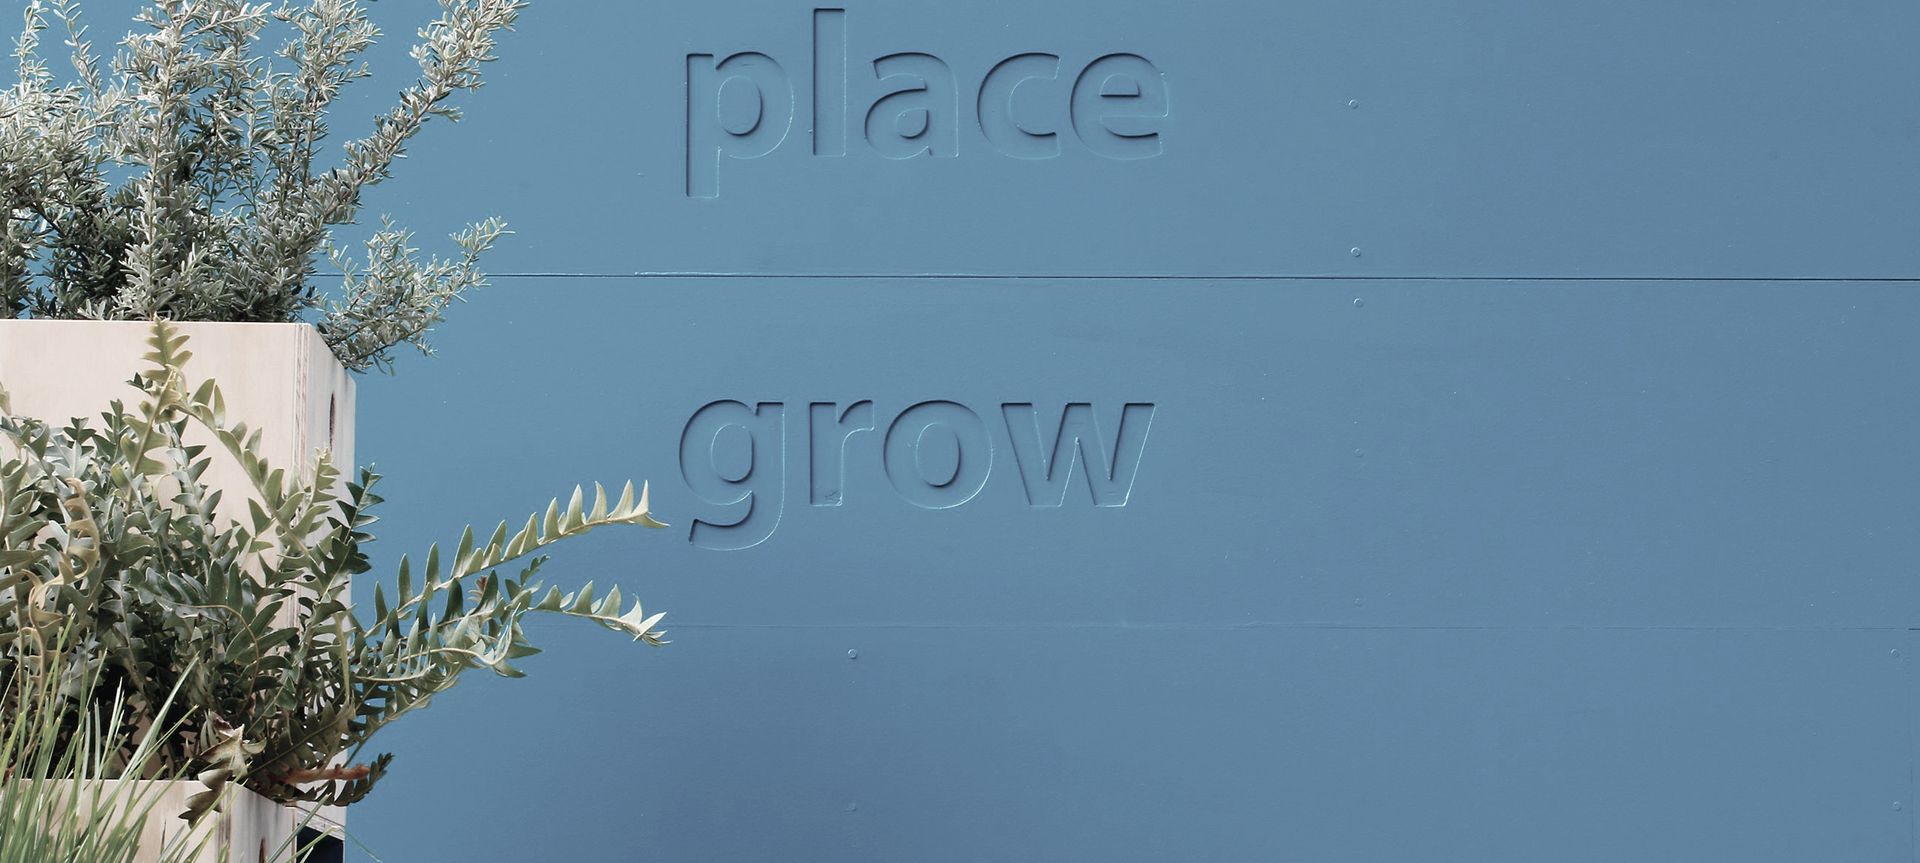 Place Grow Shift - Melbourne International Flower and Garden Show 2014 banner